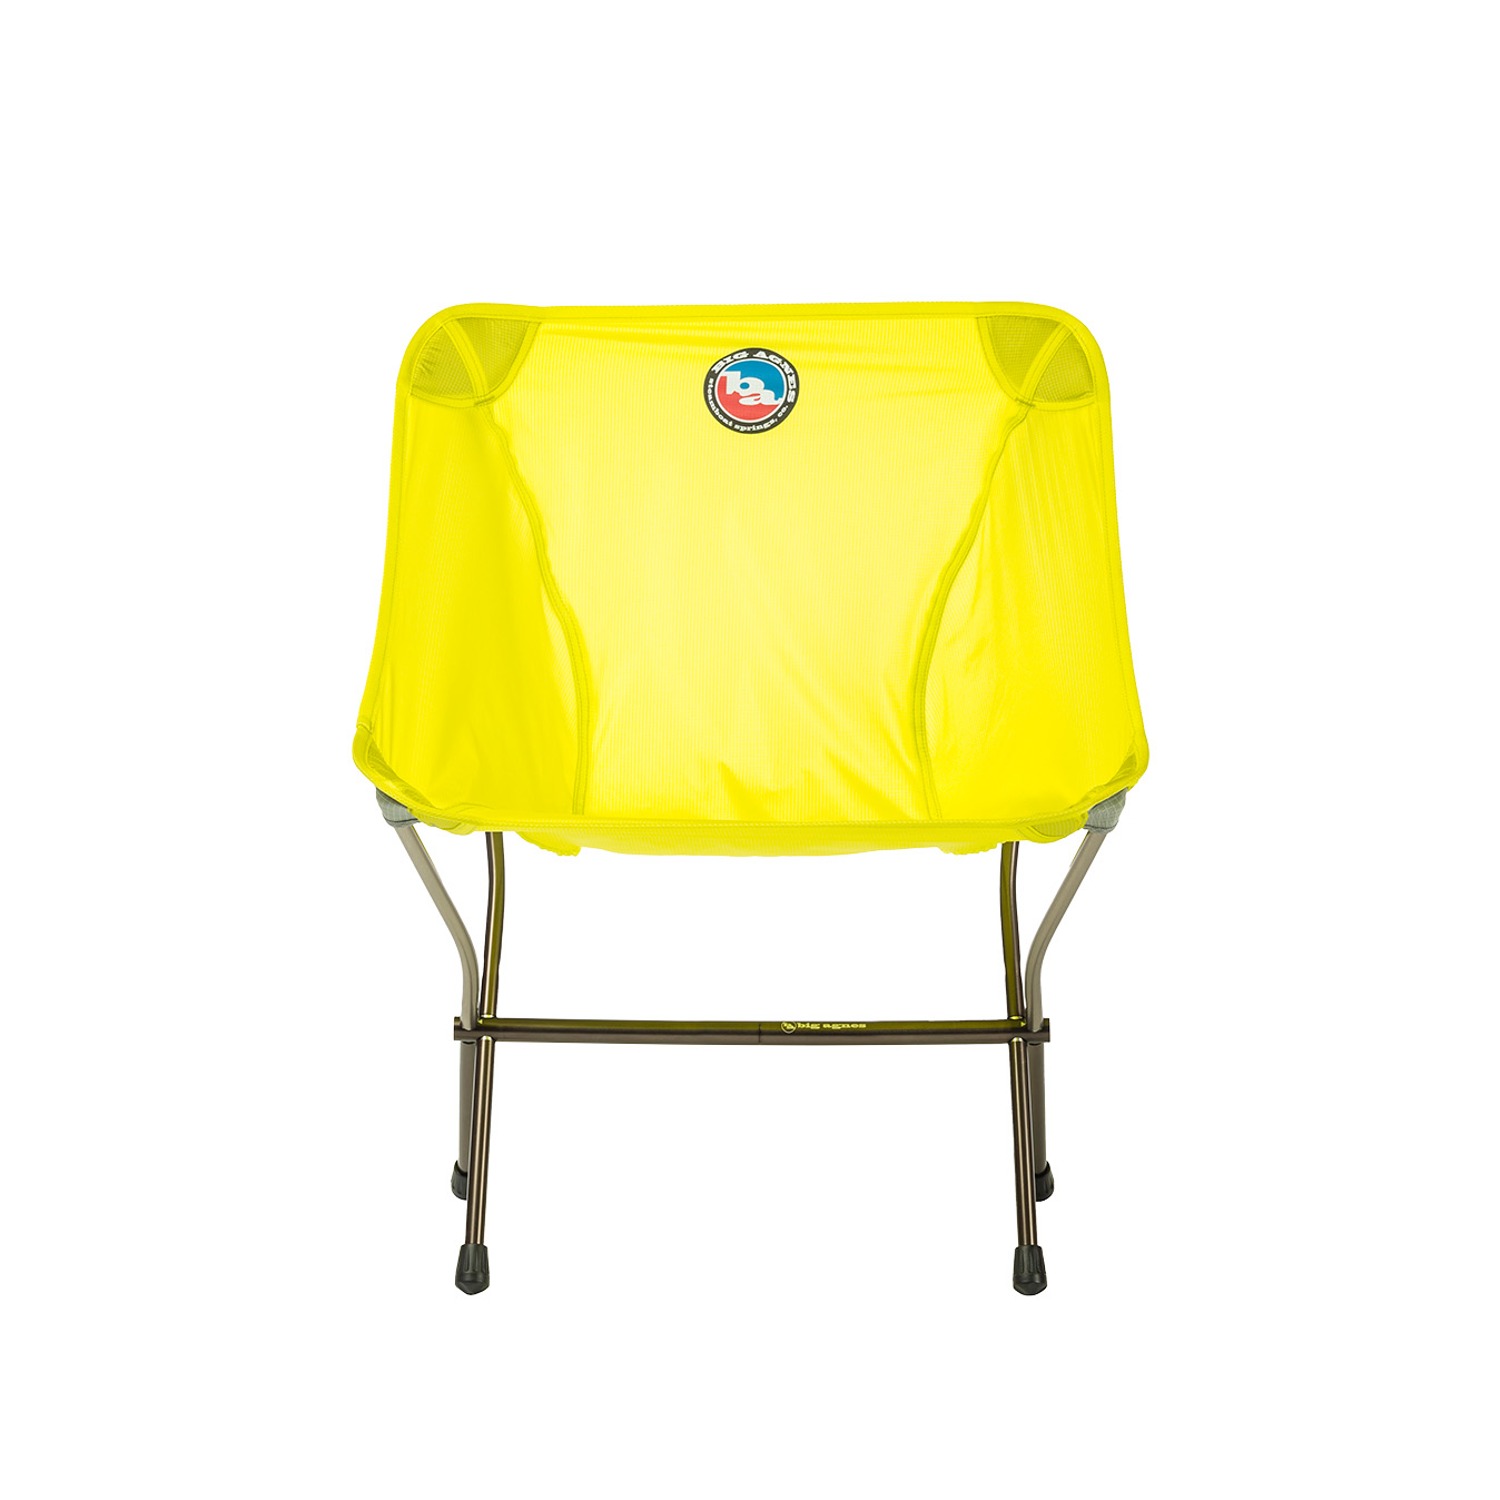 Skyline UL Chair - Yellow